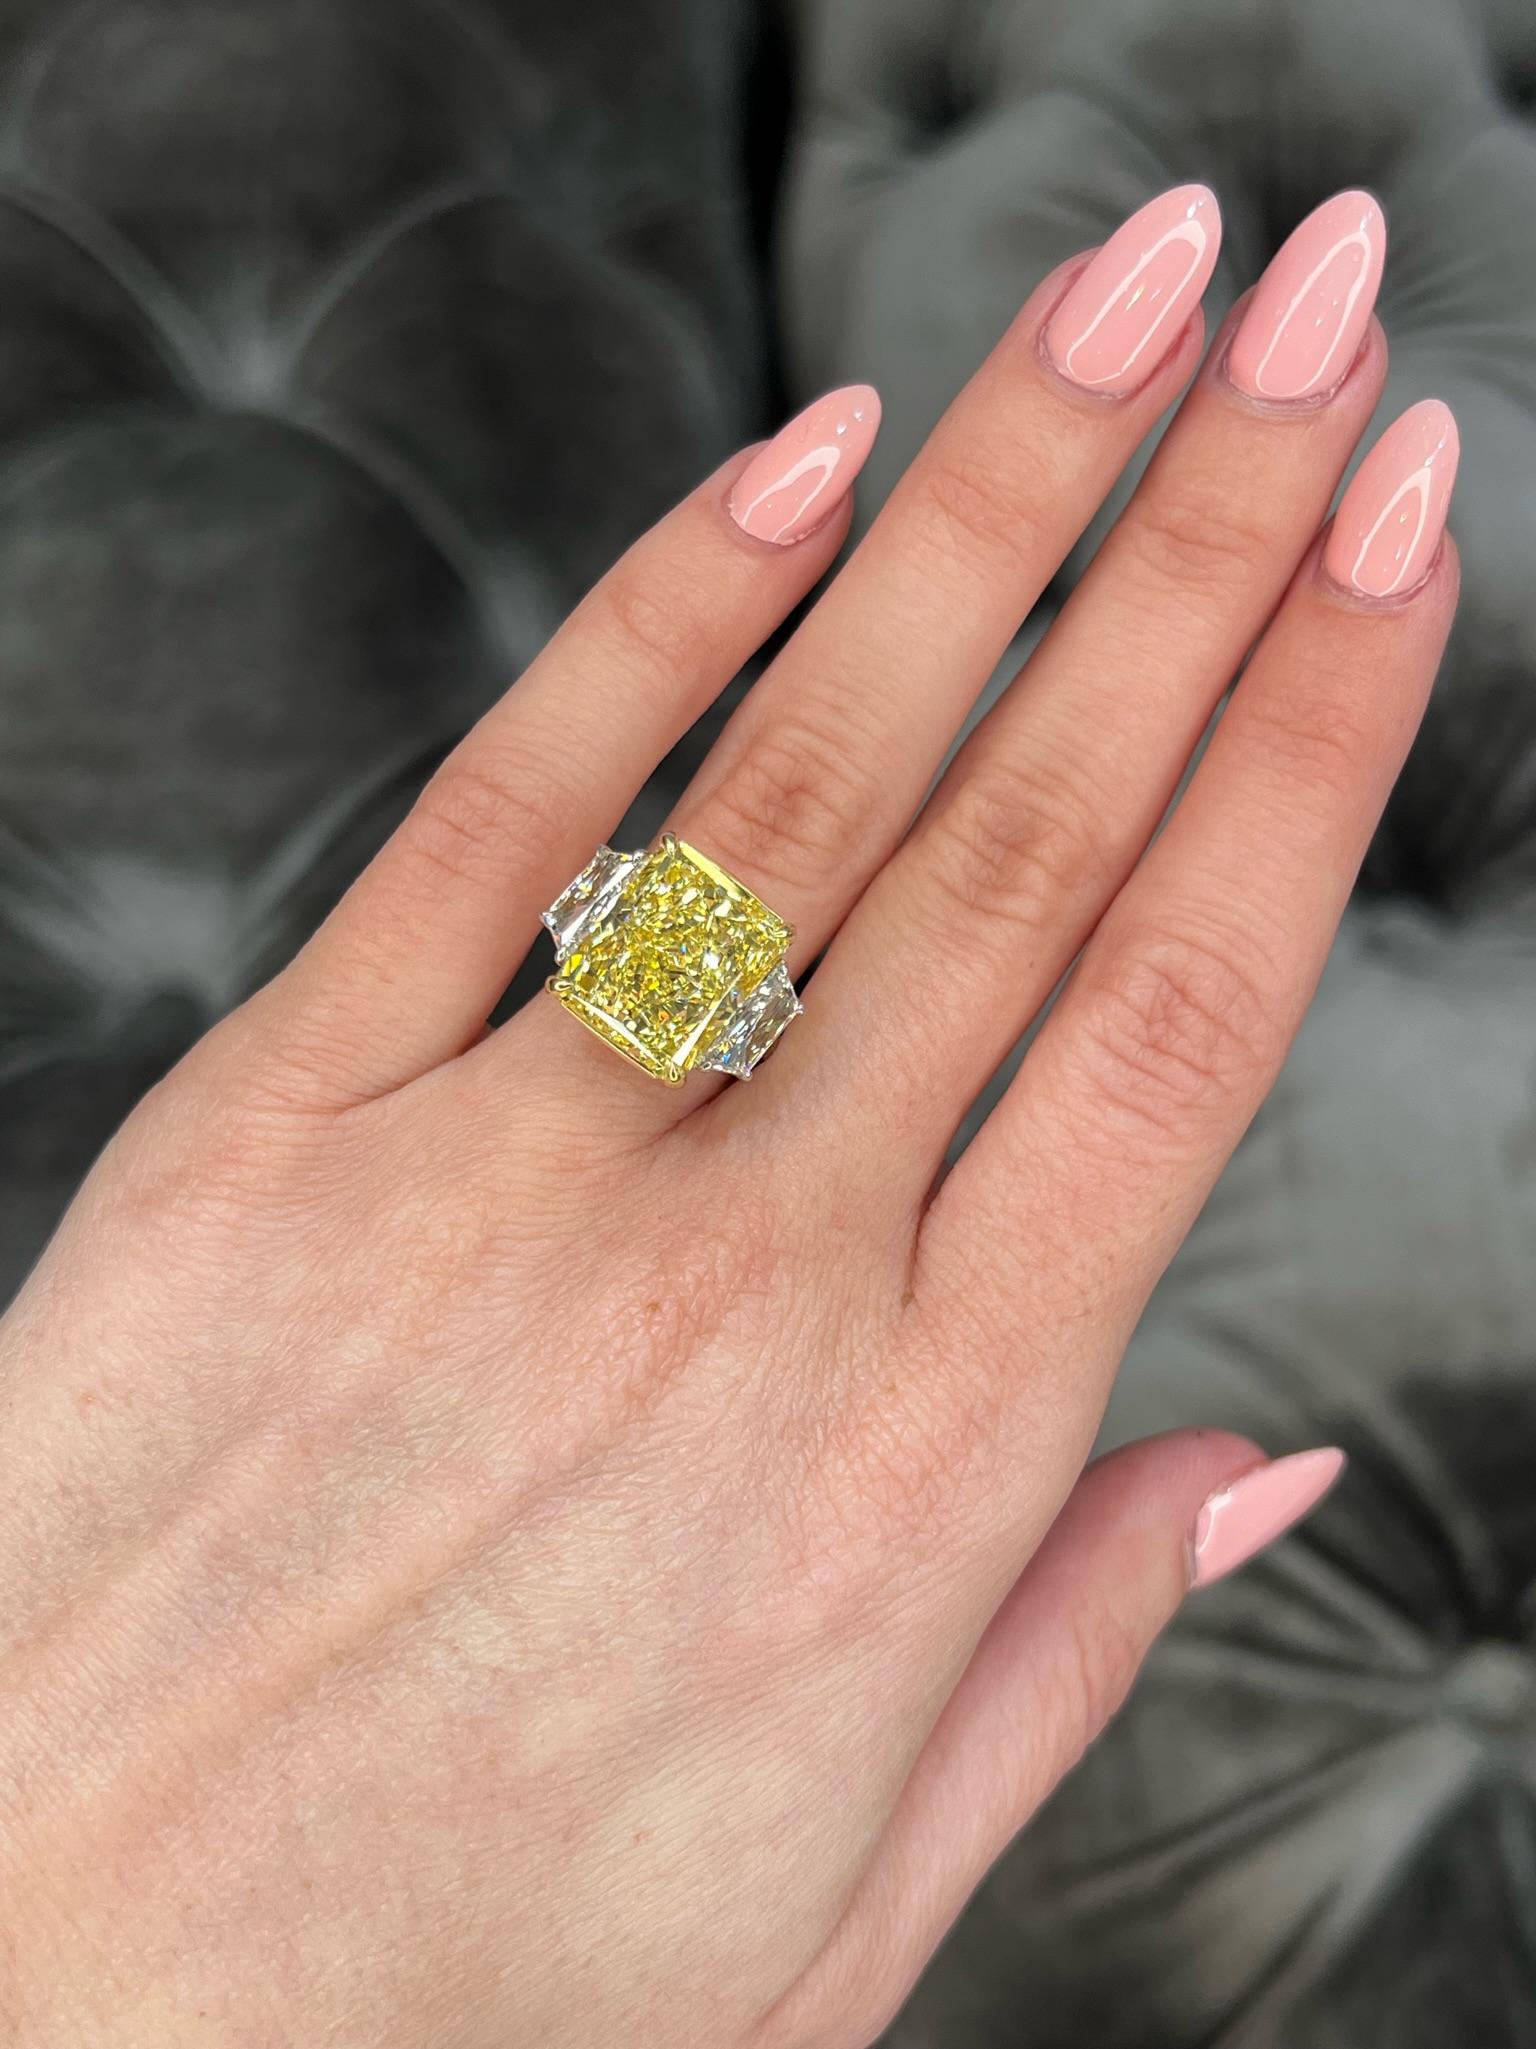 David Rosenberg 10.03 Carat Radiant Fancy Yellow VS2 GIA Diamond Engagement Ring For Sale 1